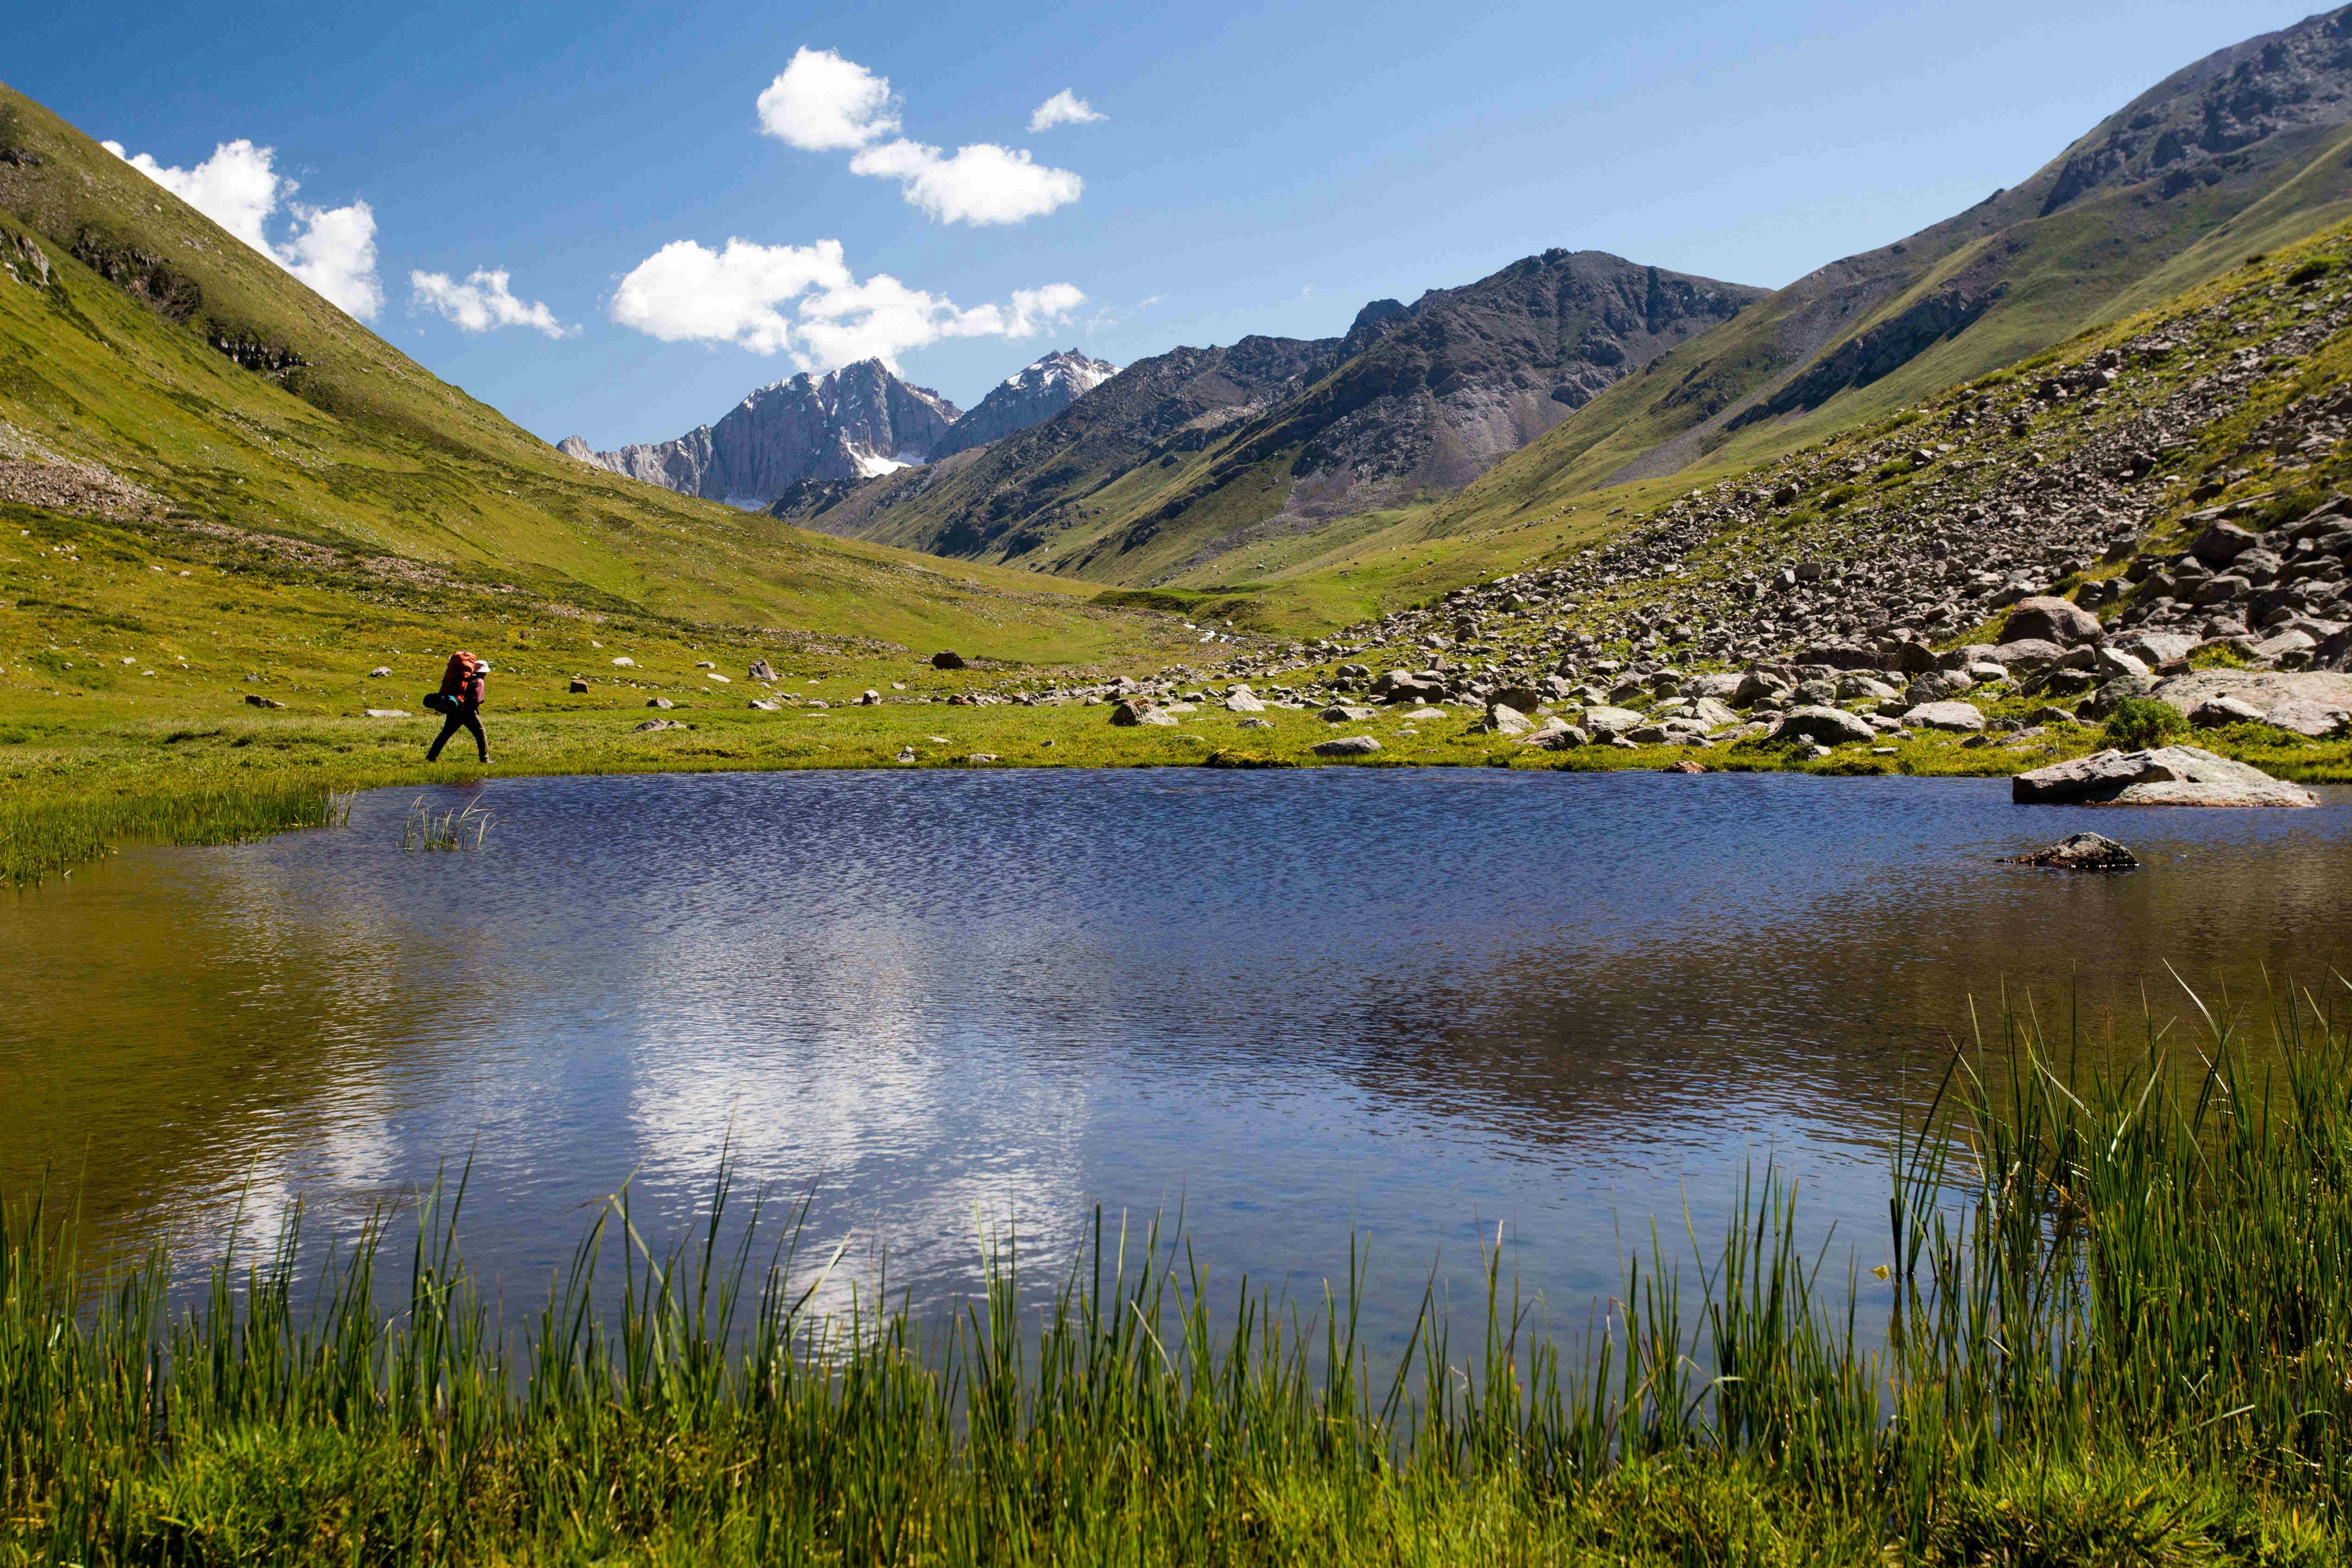 A trekker hikes along a lake in Kyrgyzstan.